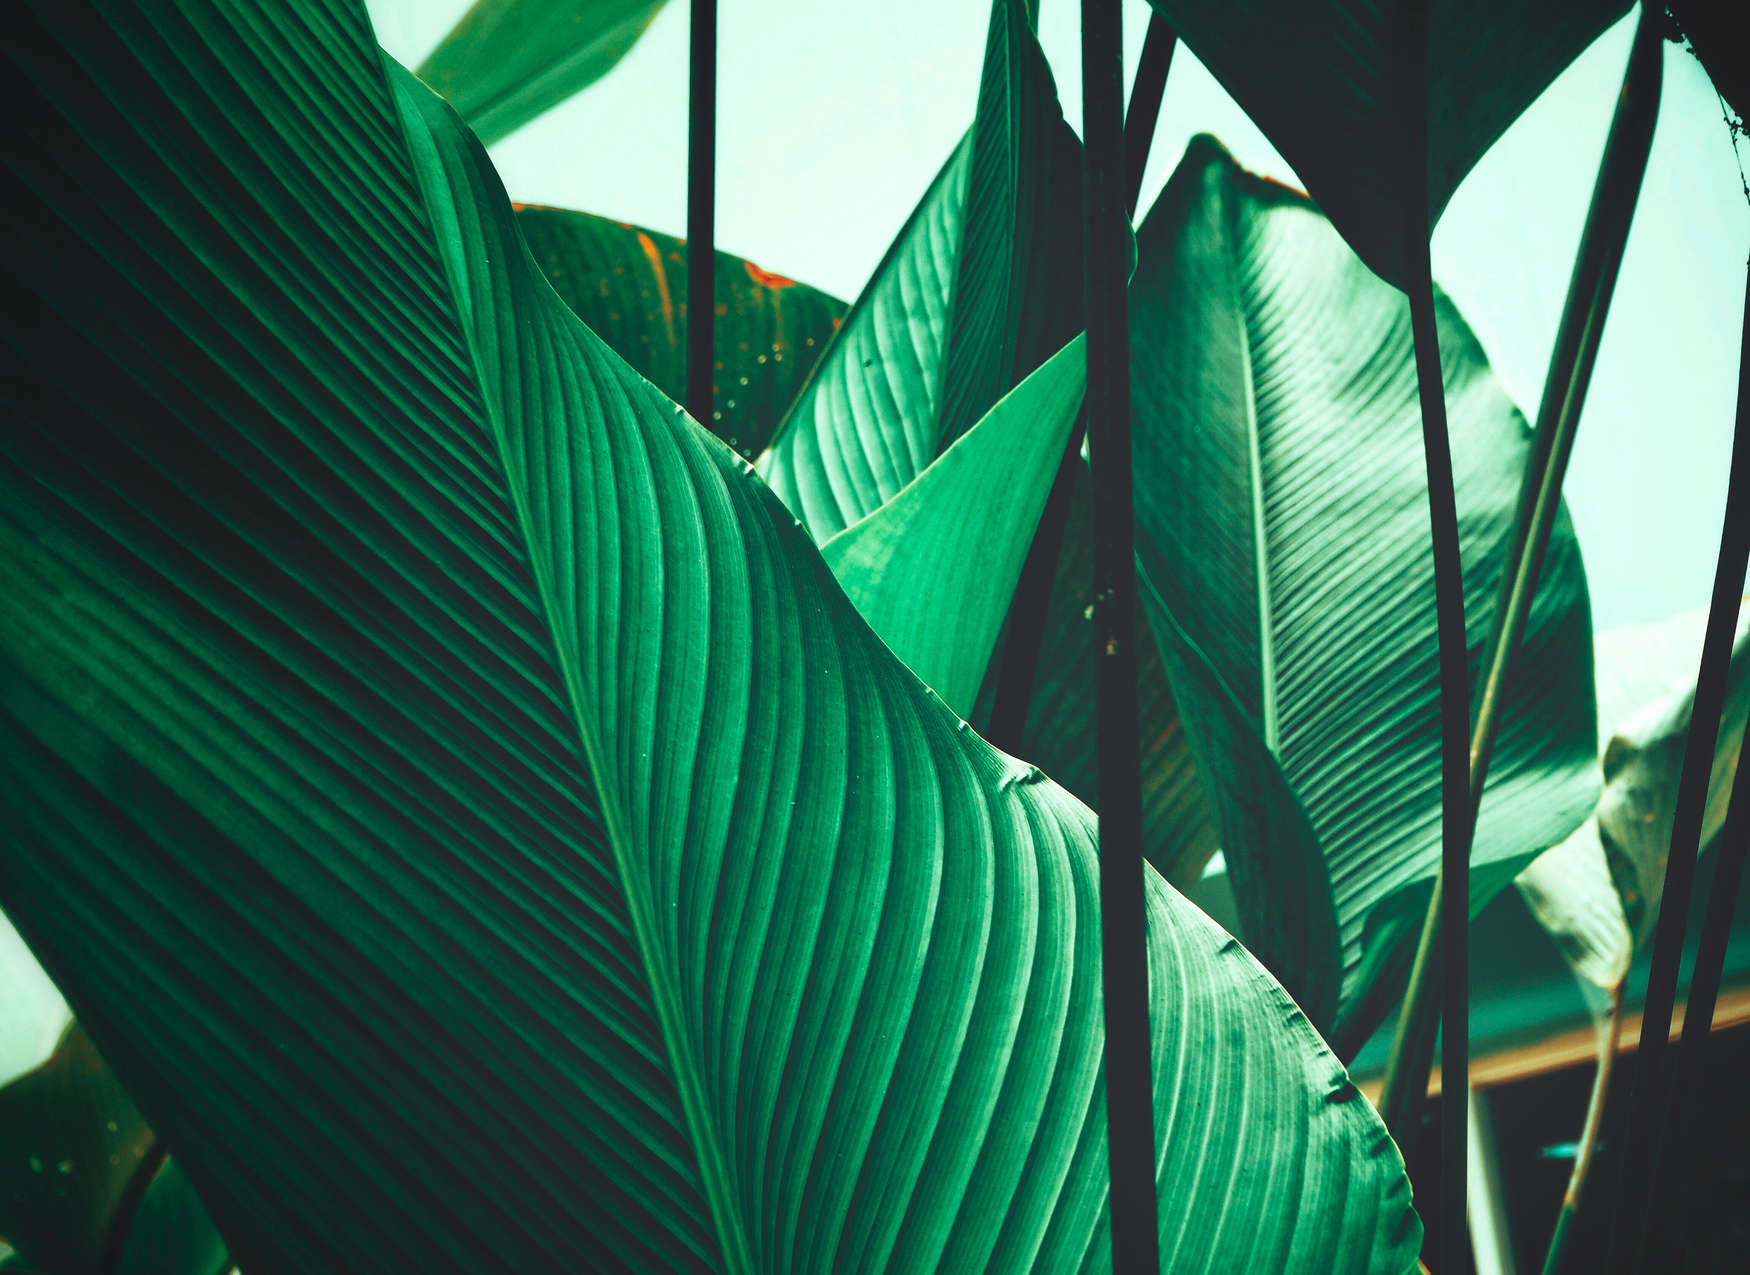             Photo wallpaper palm trees & banana leaves - Green, Black
        